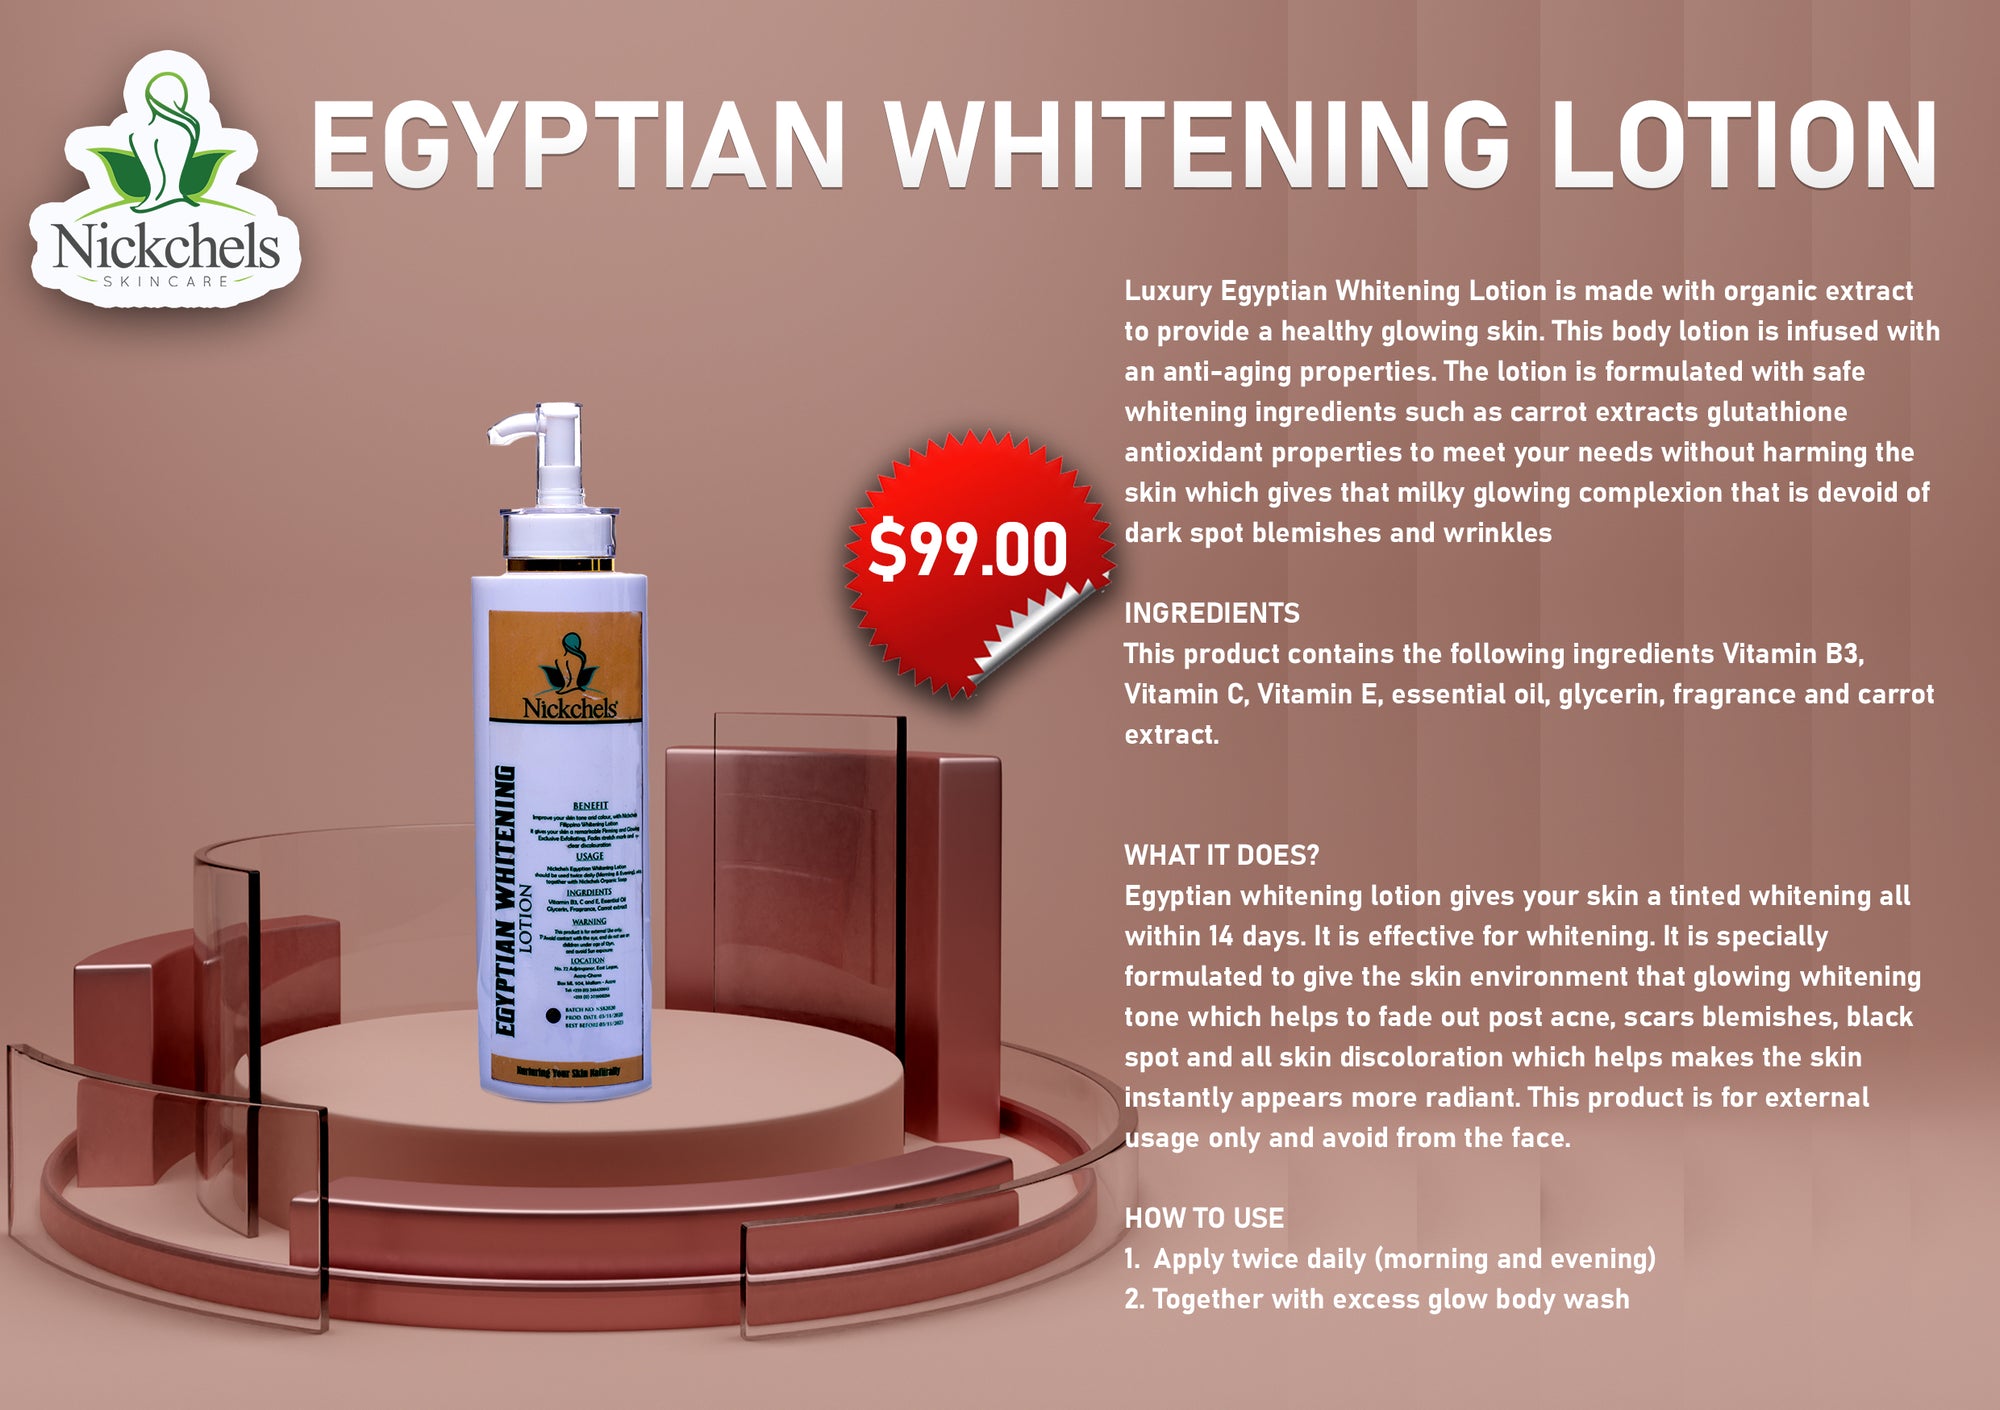 EGYPTIAN WHITENING LOTION